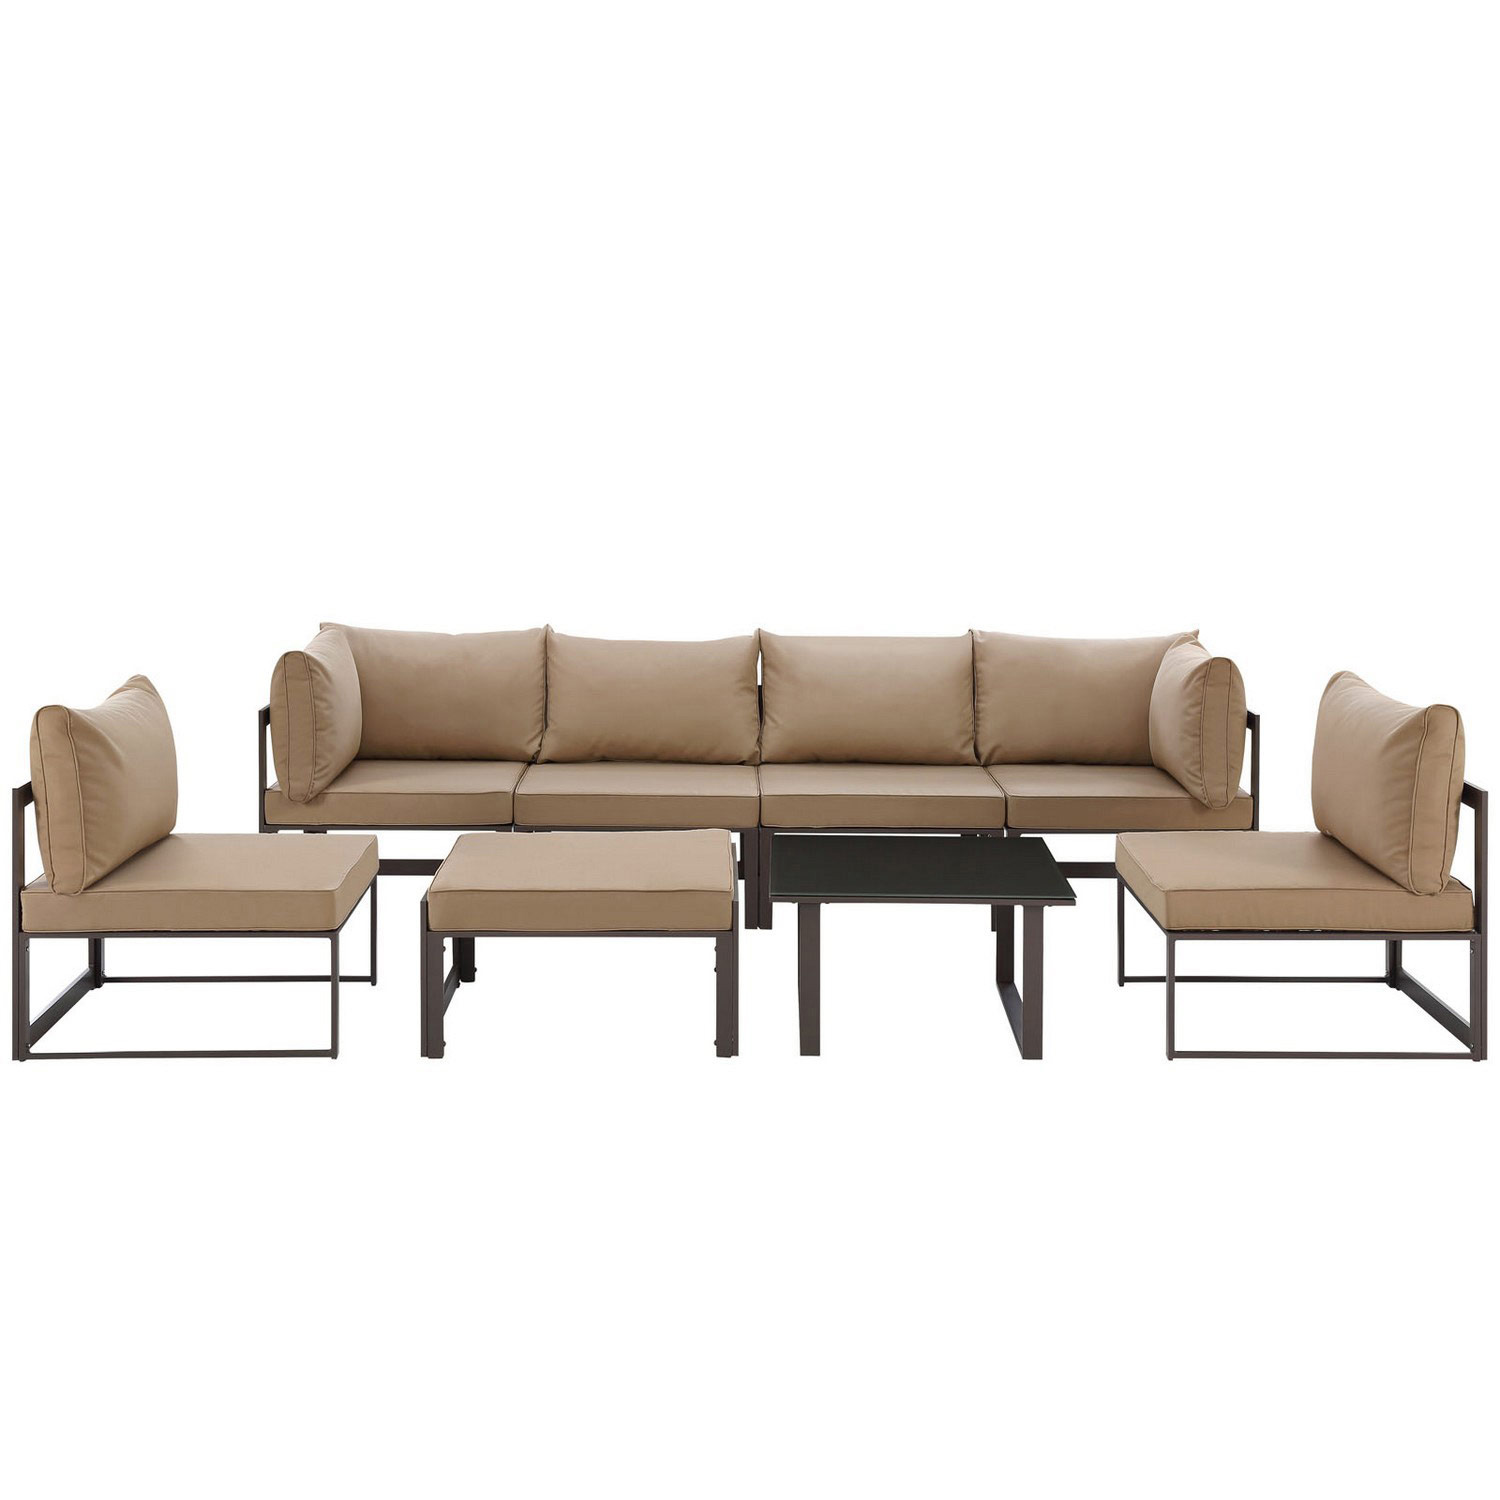 Modway Fortuna 8 Piece Outdoor Patio Sectional Sofa Set - Brown/Mocha